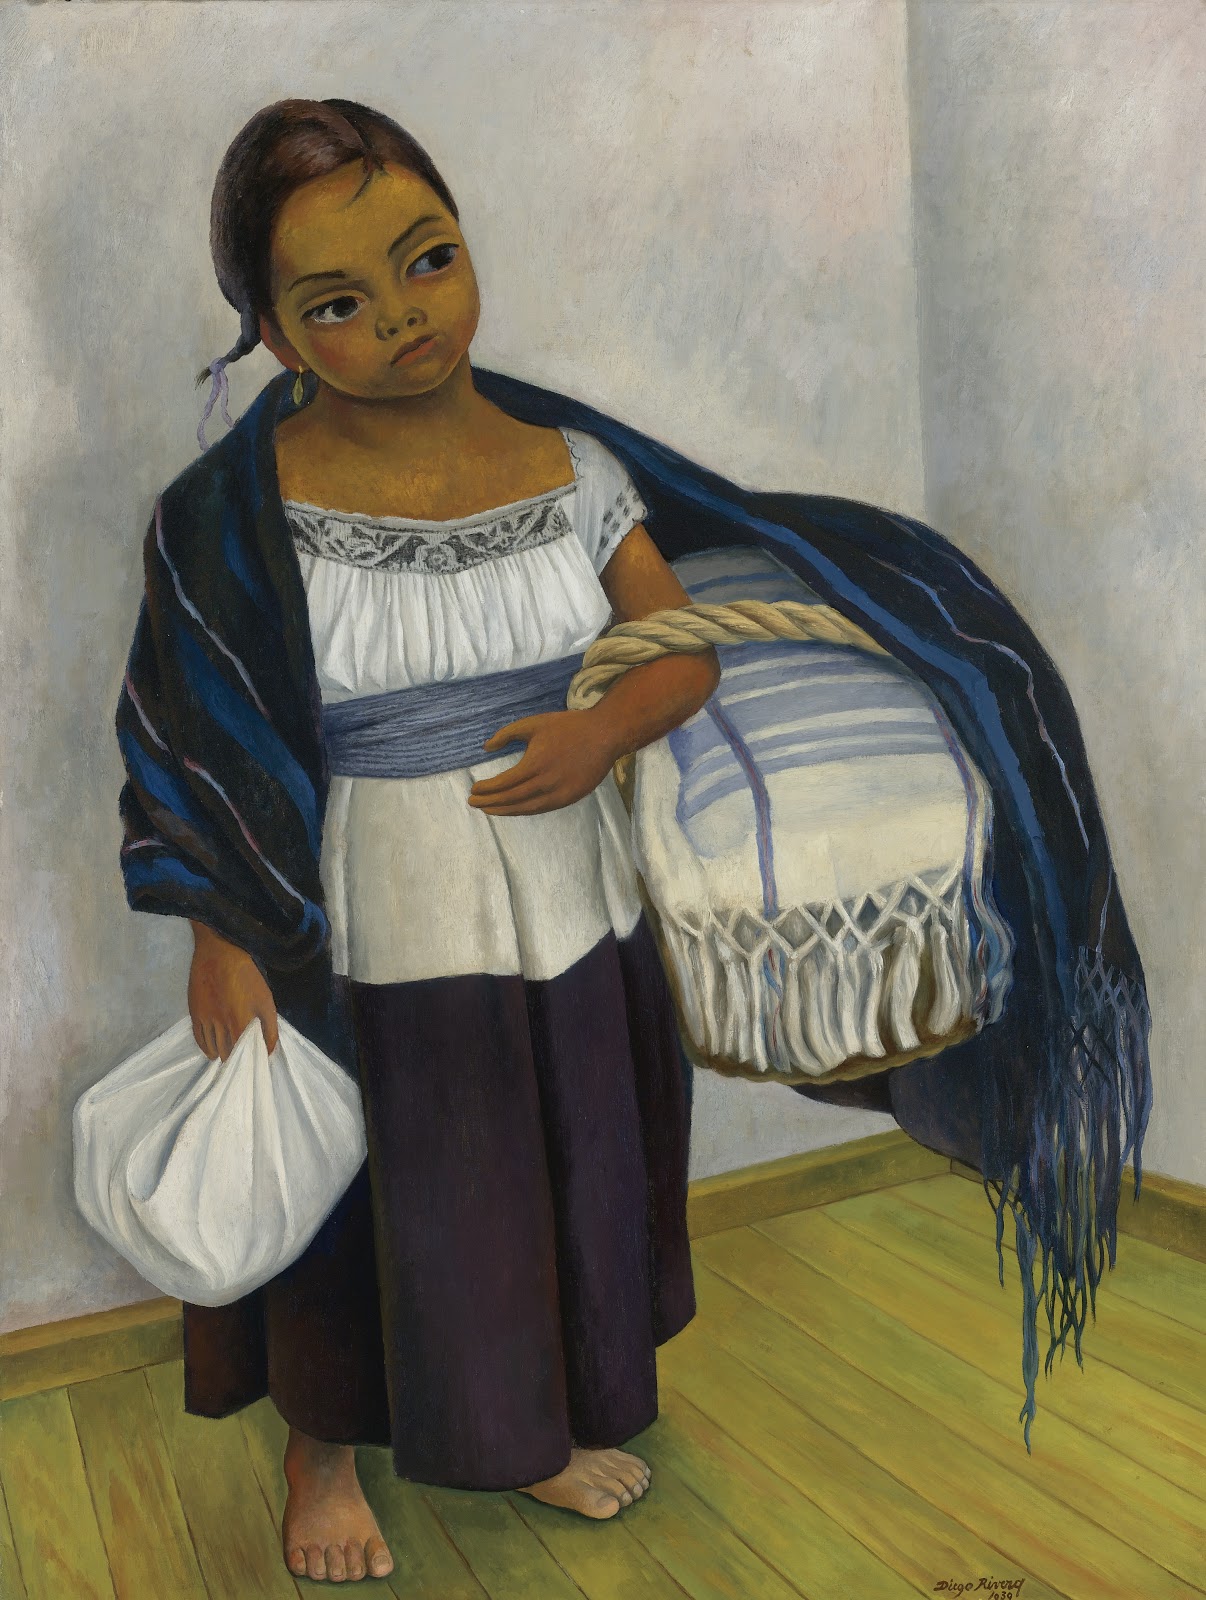 Diego+Rivera-1886-1957 (19).jpg